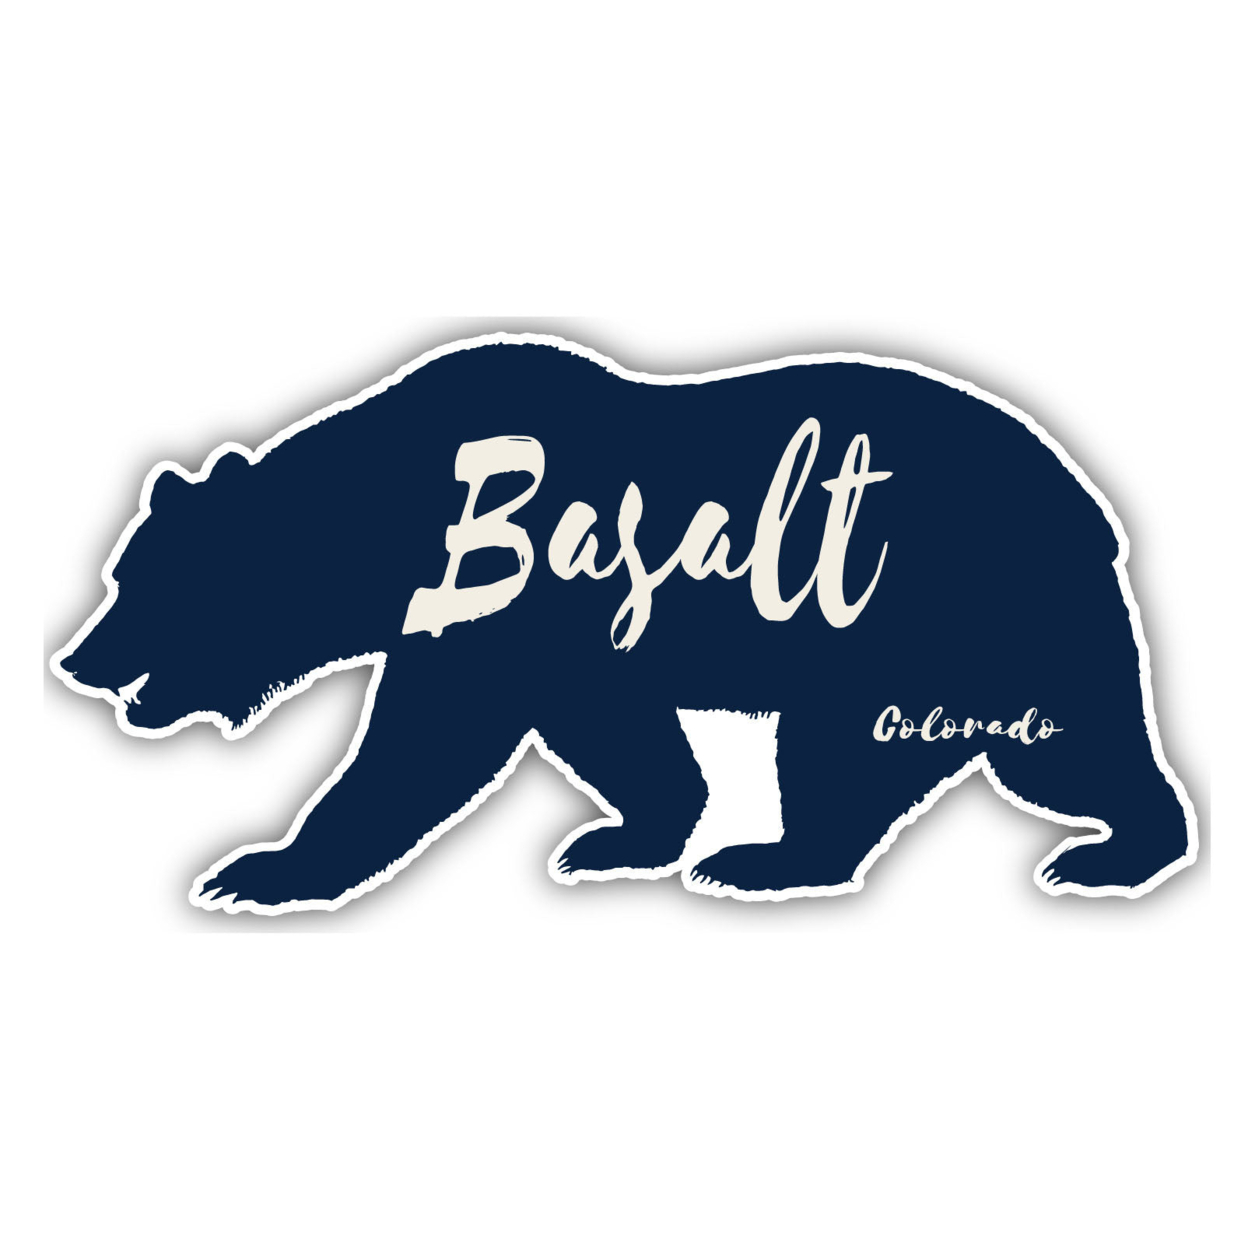 Basalt Colorado Souvenir Decorative Stickers (Choose Theme And Size) - Single Unit, 8-Inch, Bear